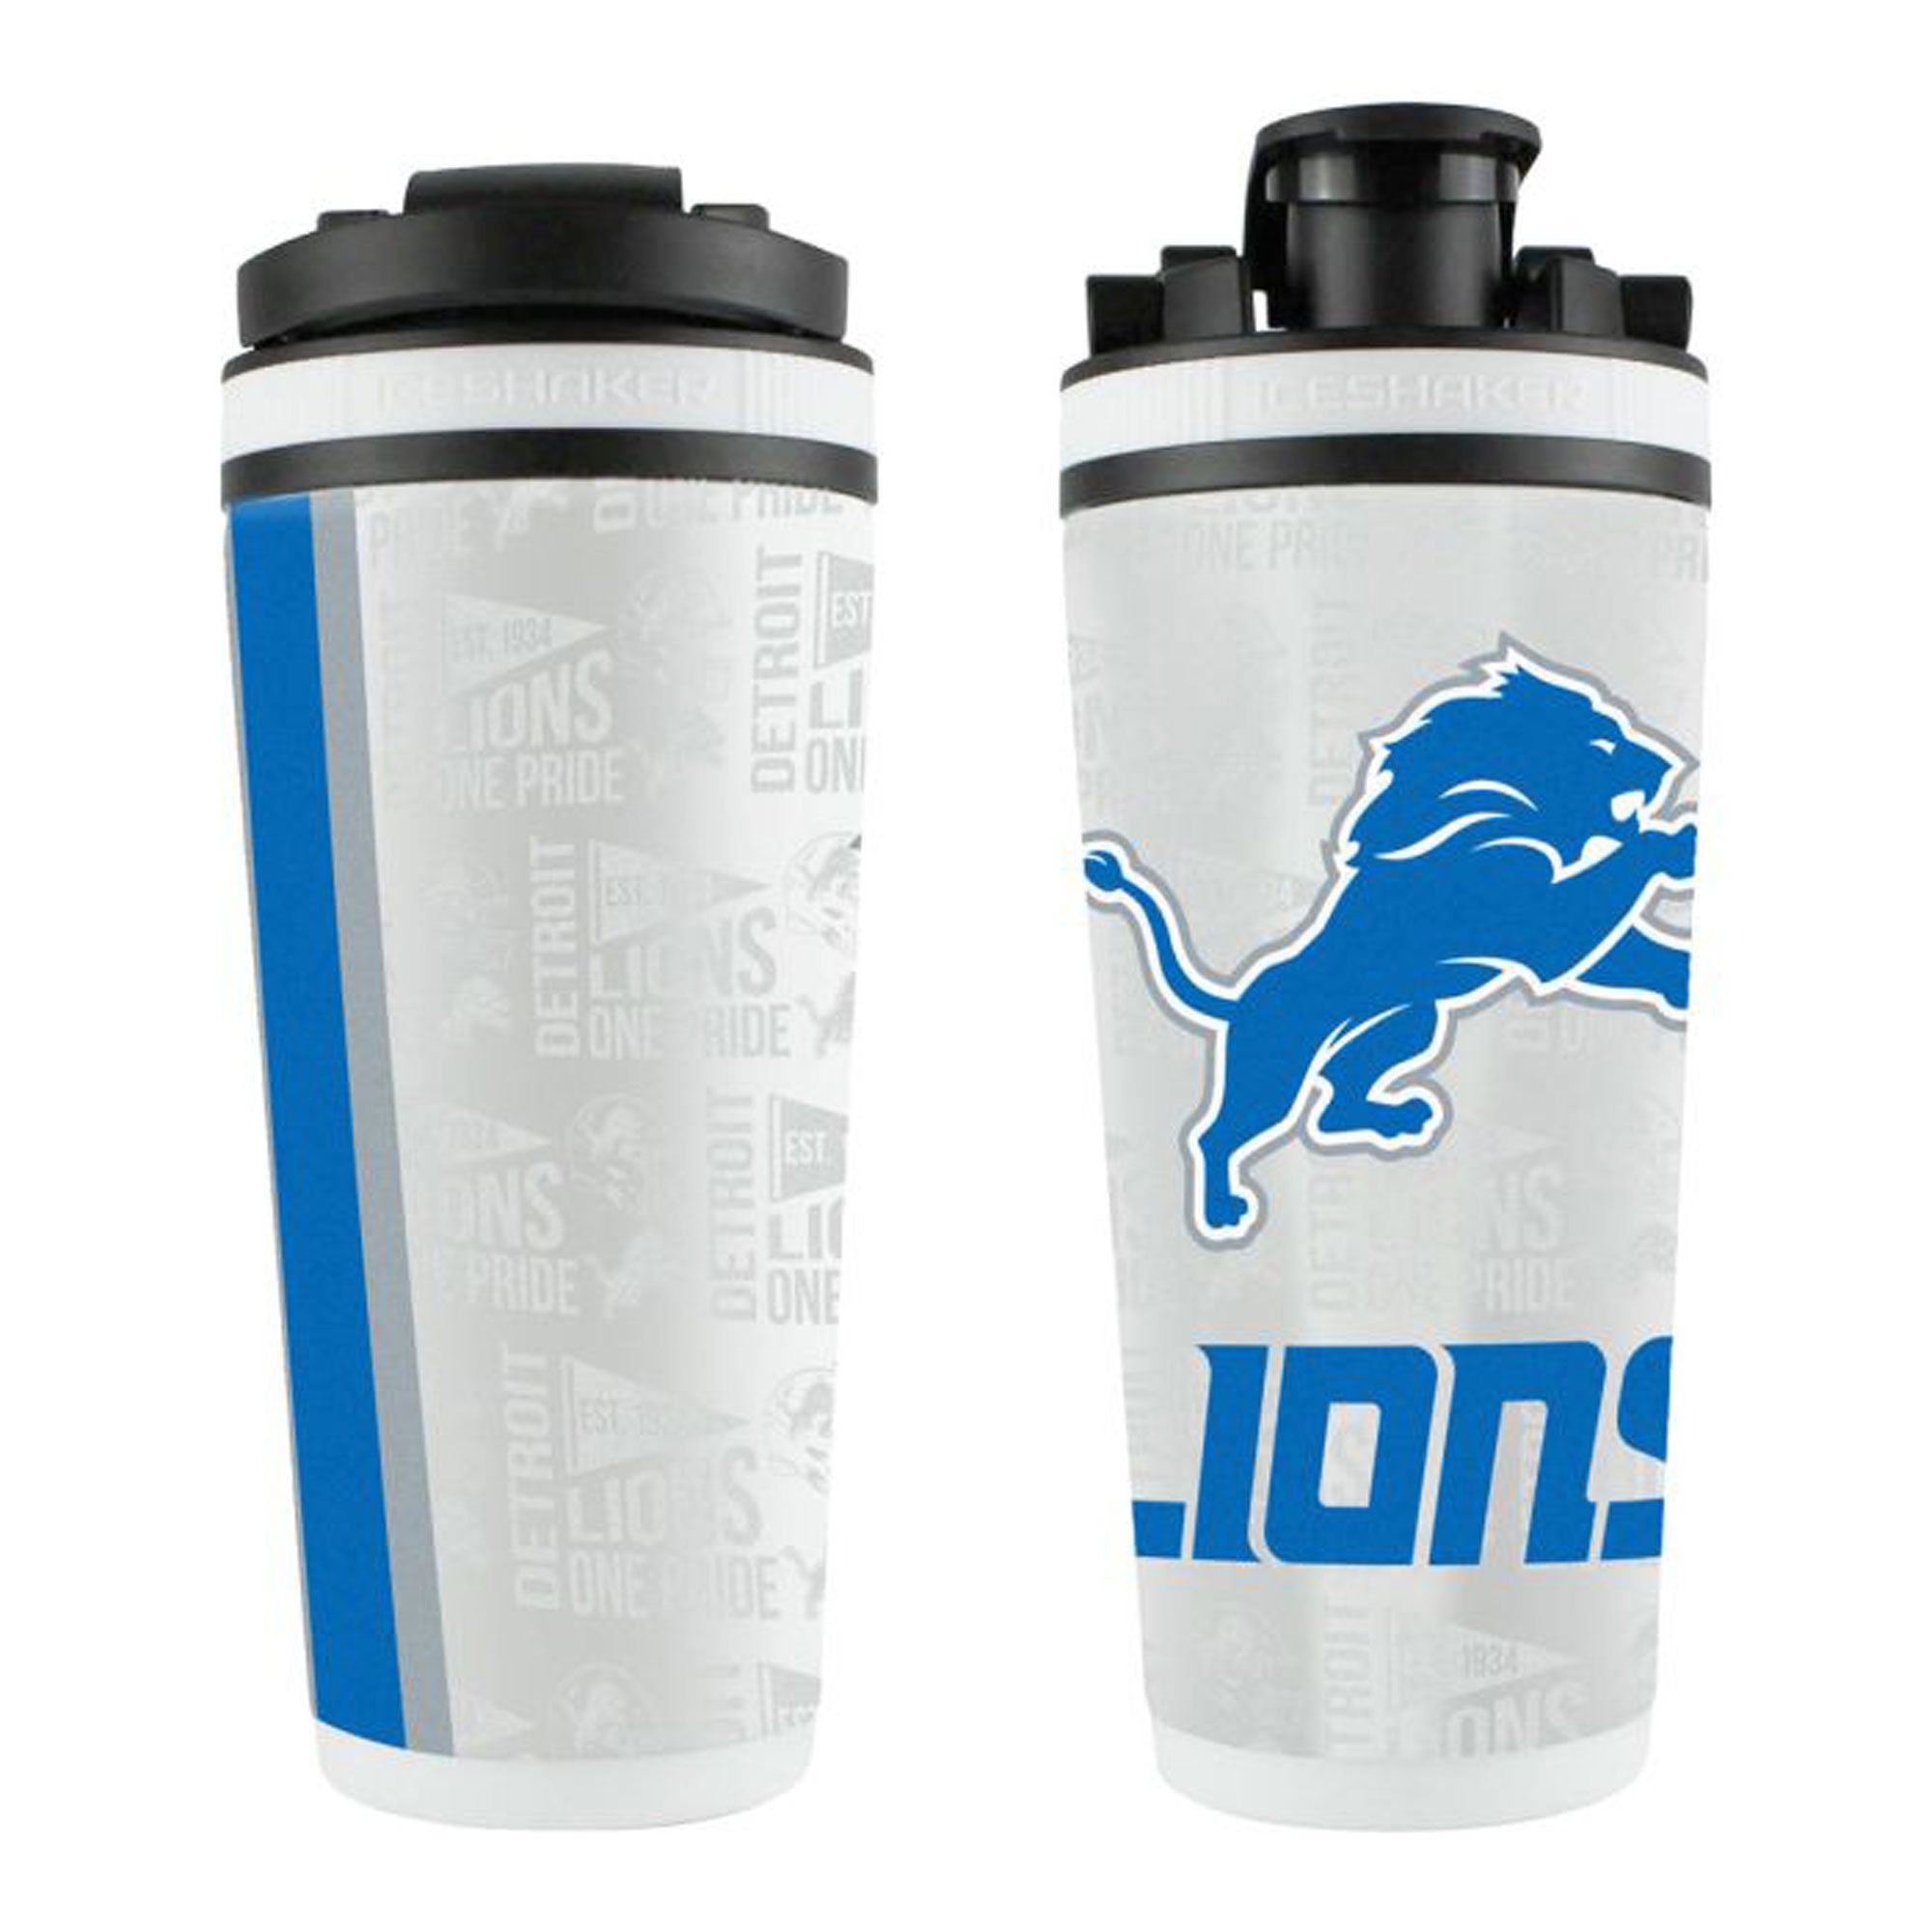 Officially Licensed NFL Detroit Lions 4D Ice Shaker